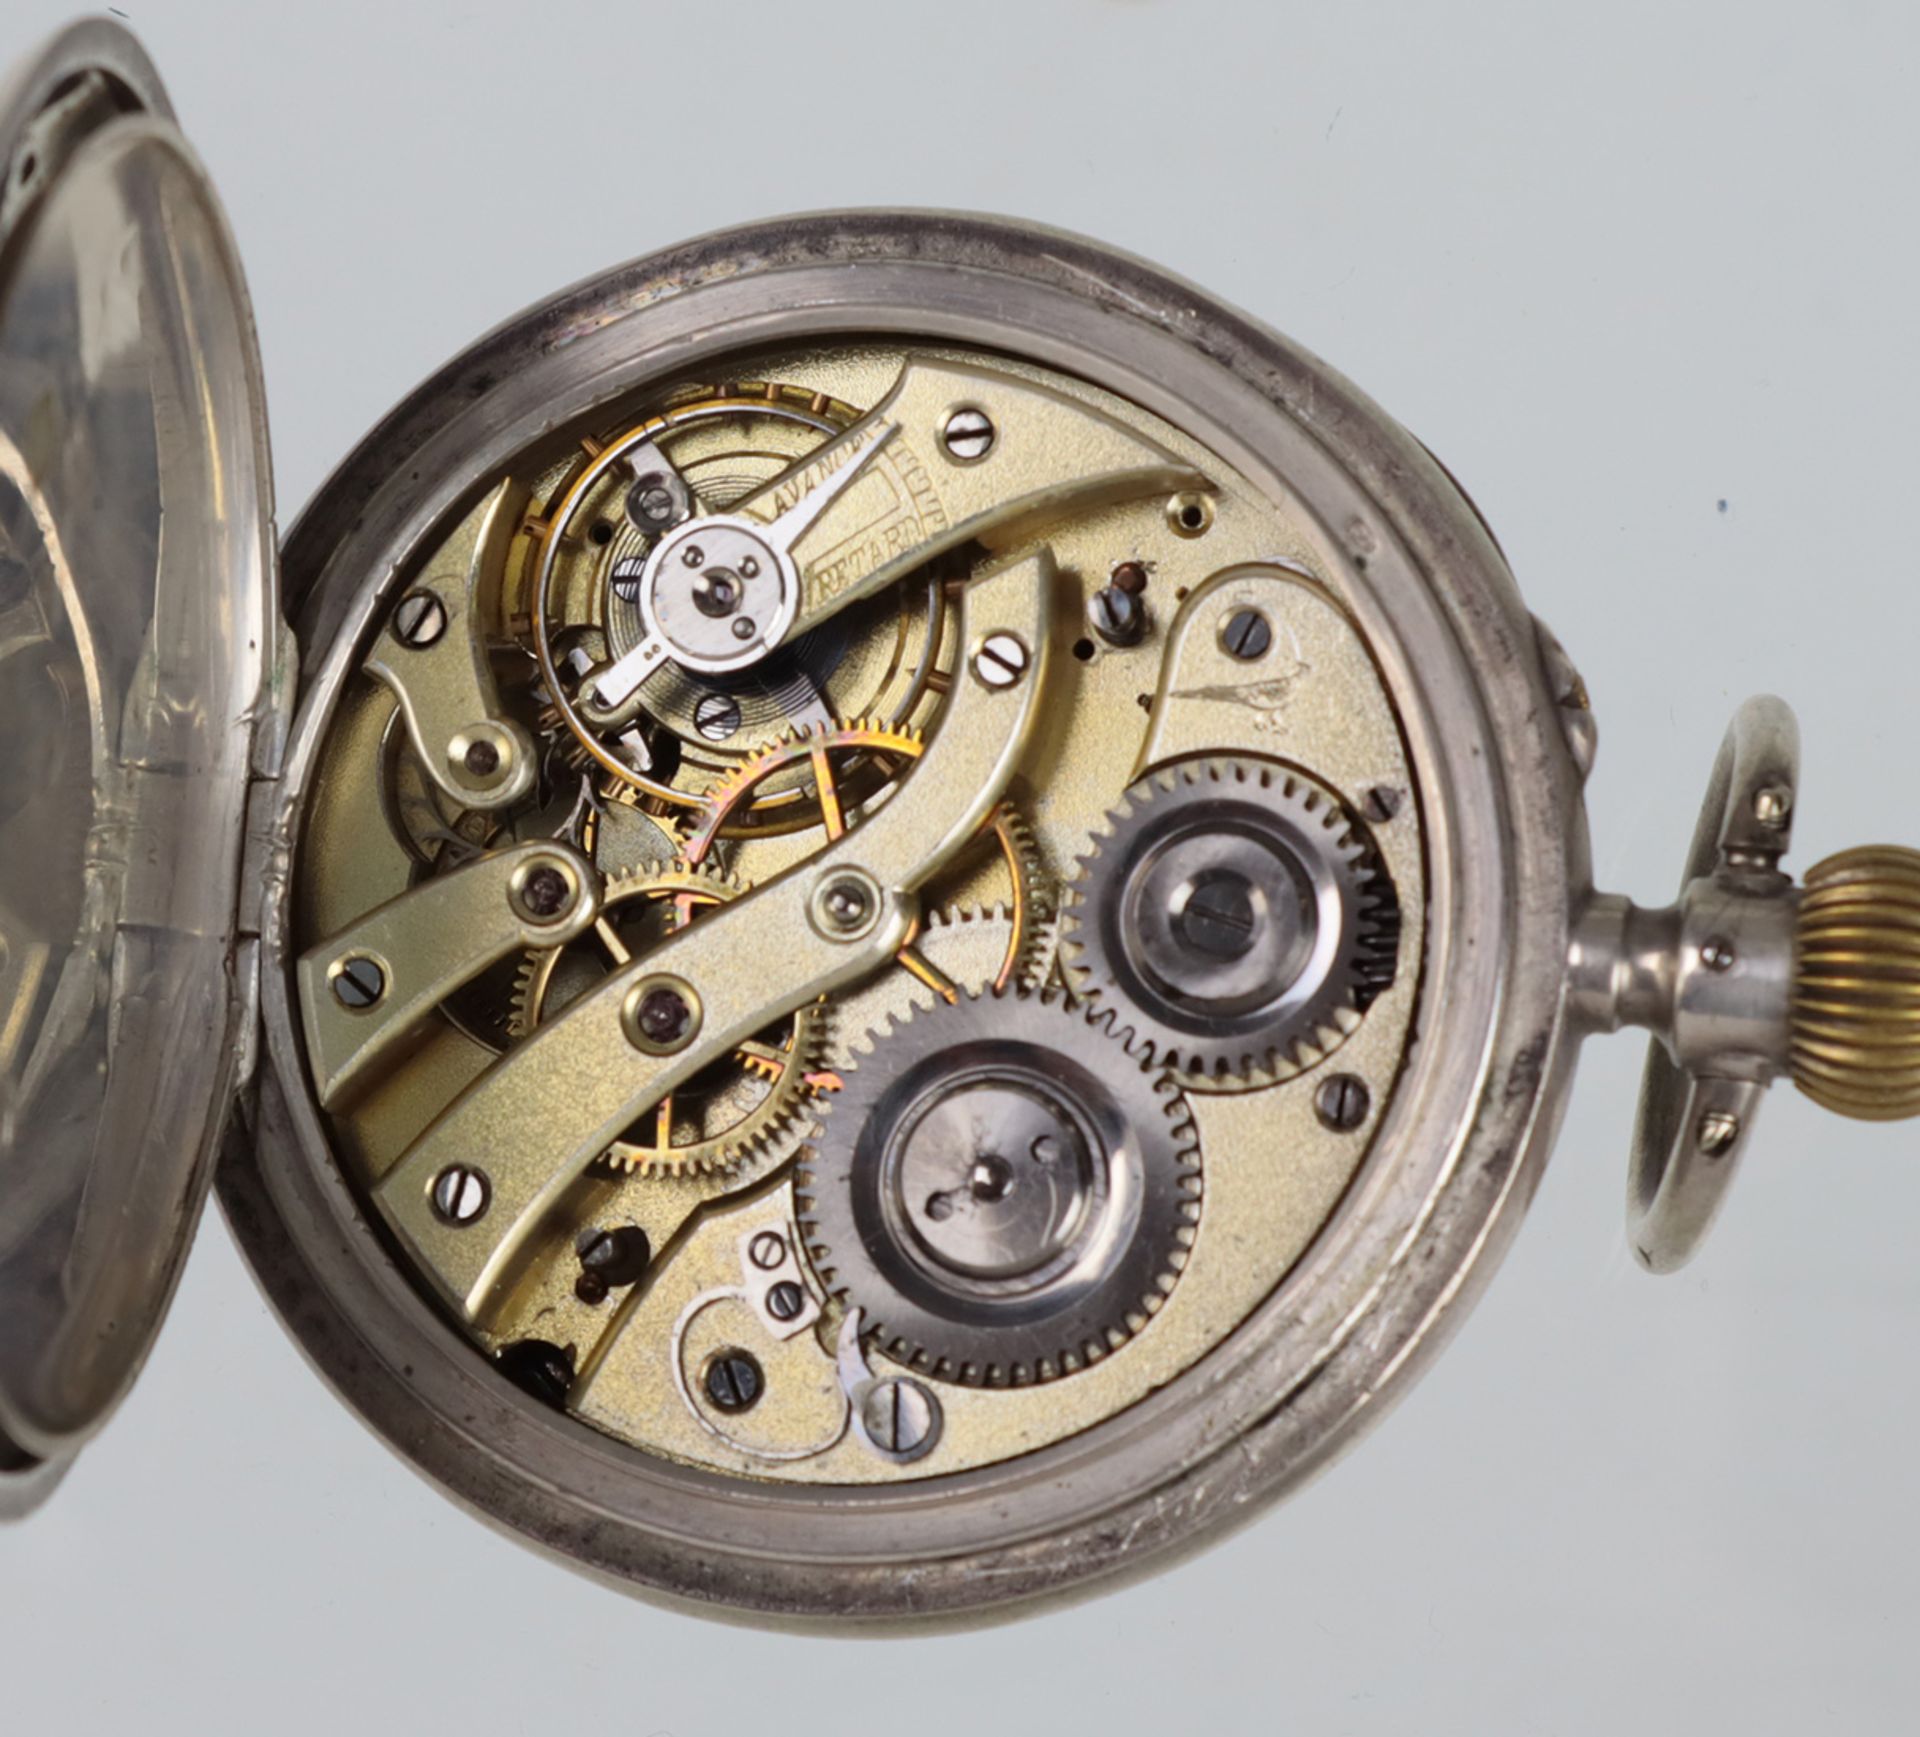 Chronograph Compteur Patent um 1900 - Image 3 of 4